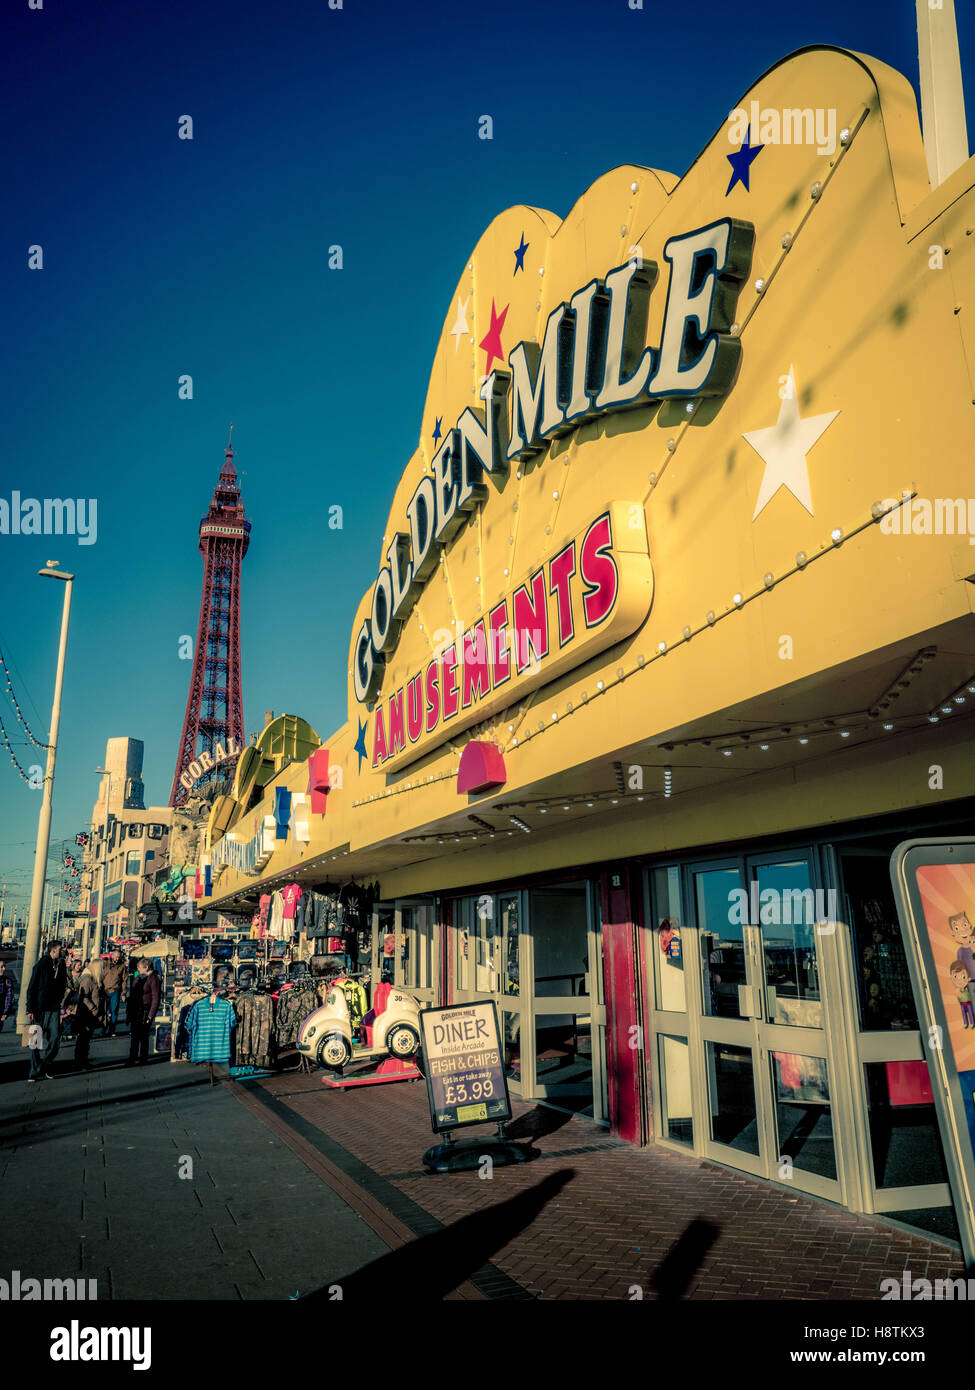 Golden Mile Amusement Arcade sign on seafront, Blackpool, Lancashire, UK. Stock Photo